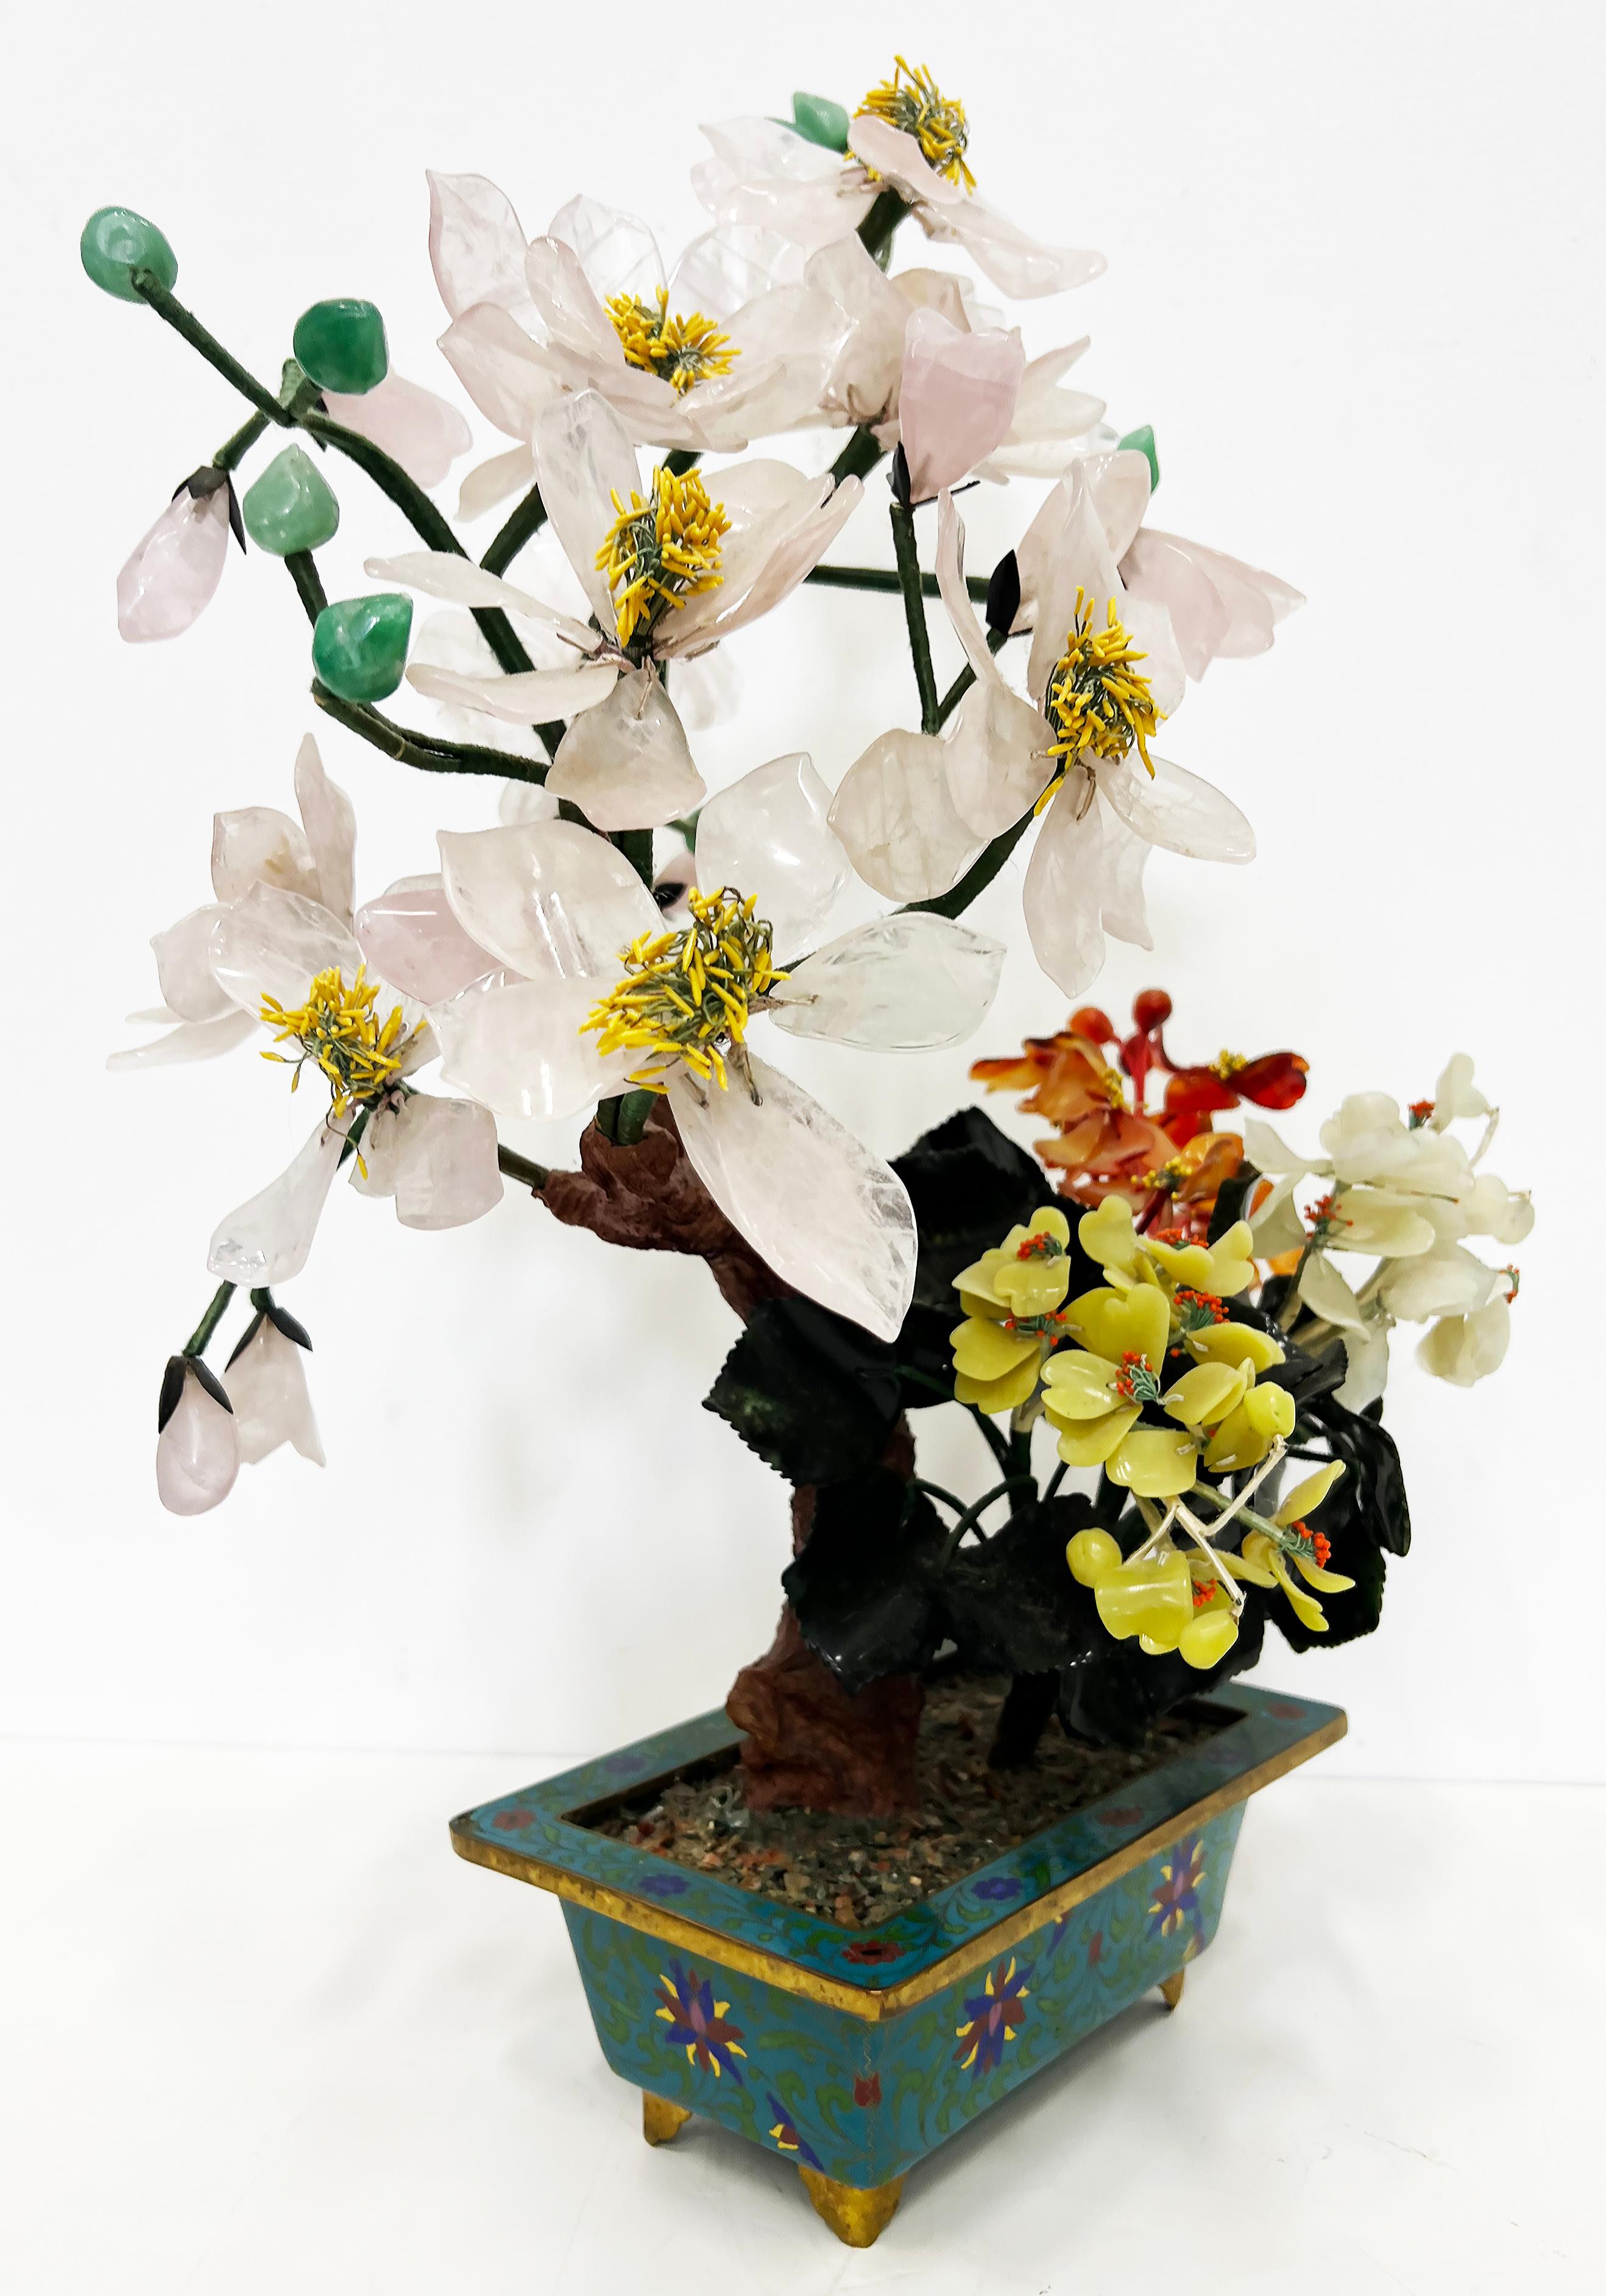 Enameled Vintage Chinese Jade Precious Stone Bonsai Tree Sculpture, Cloisonné Planter For Sale